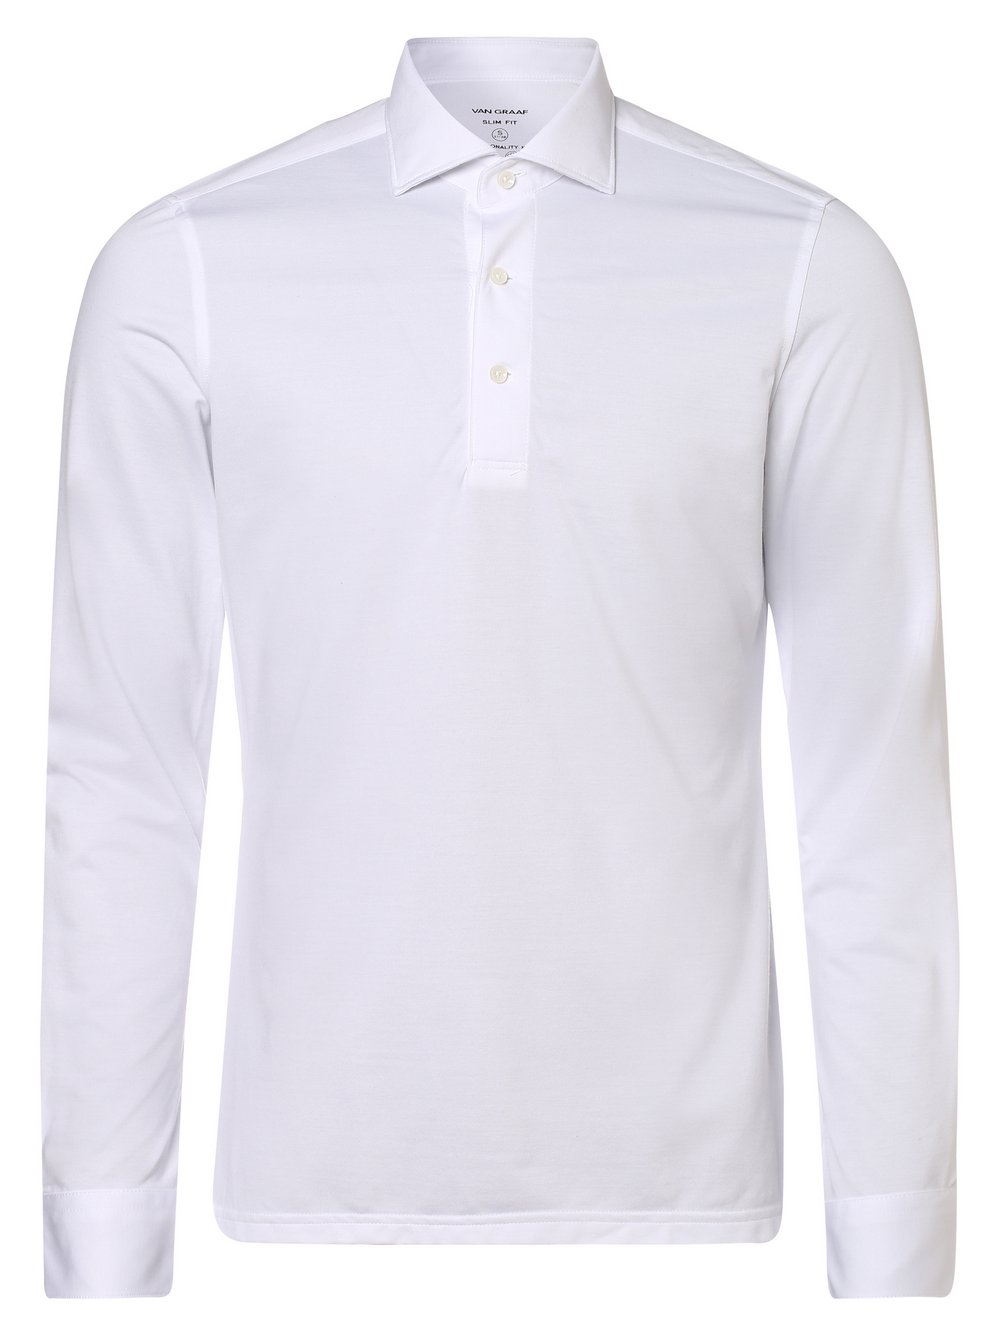 Van Graaf - Męska koszulka polo – łatwa w prasowaniu, biały